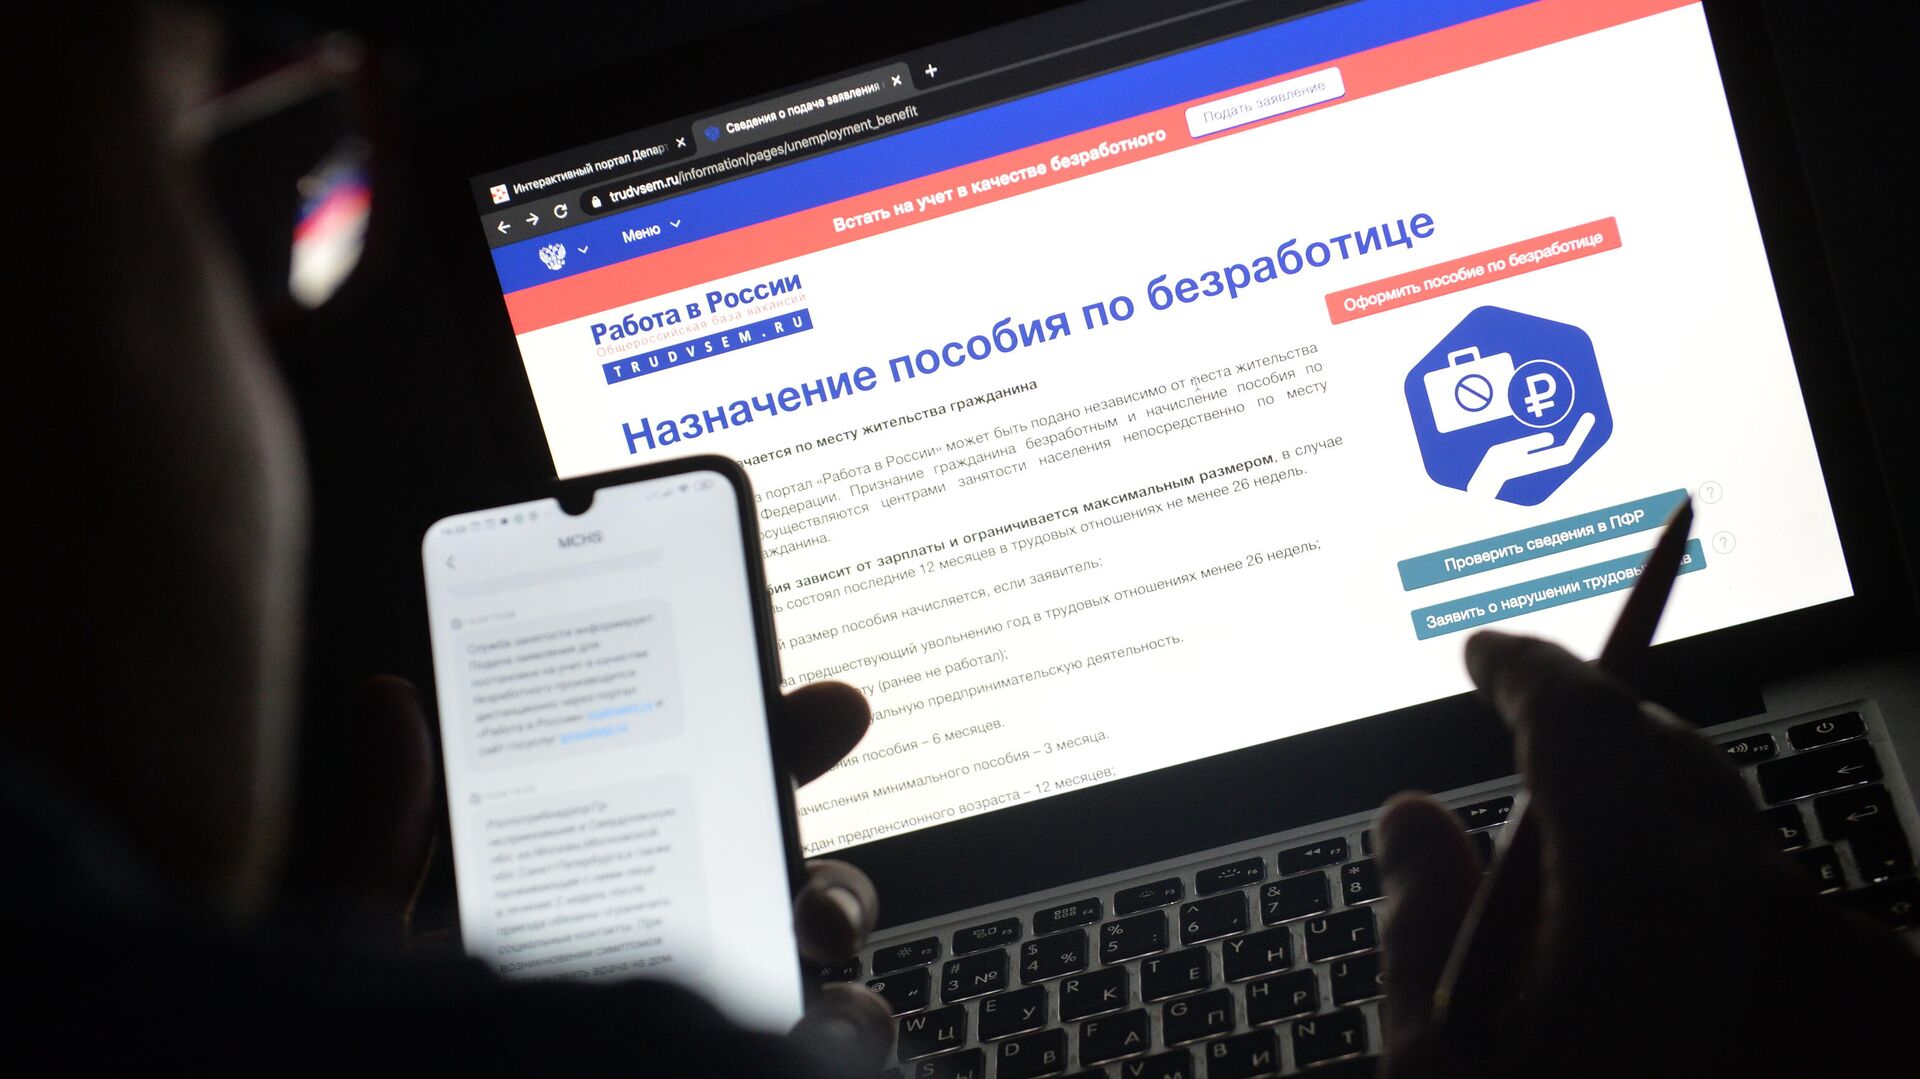 Решетников заявил о стабилизации ситуации с безработицей в России